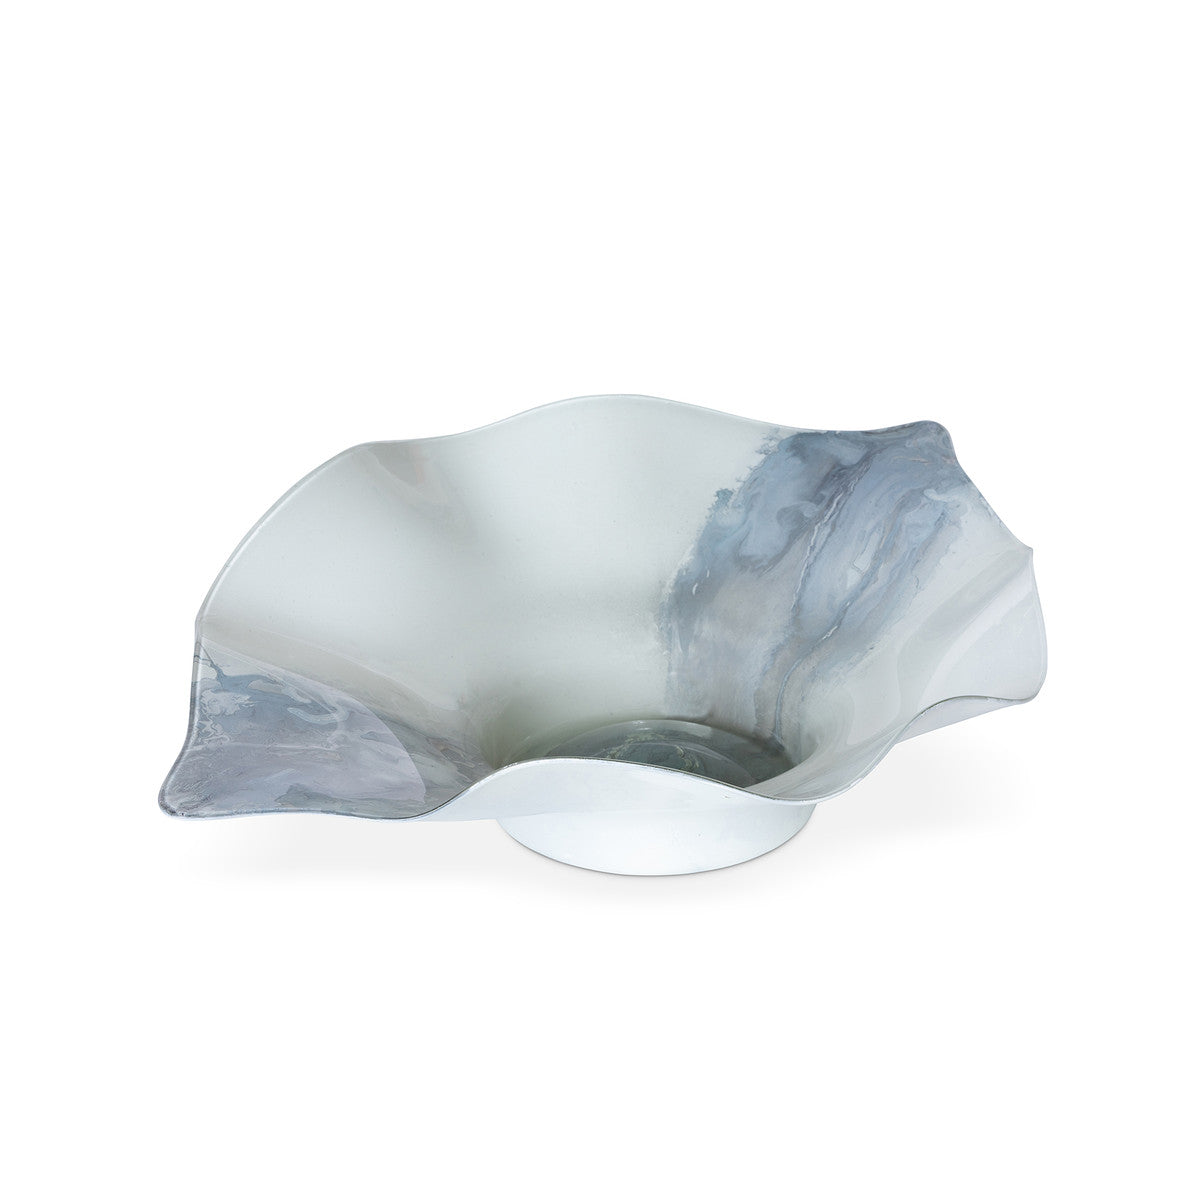 Tempest Artisan Glass Decorative Bowl